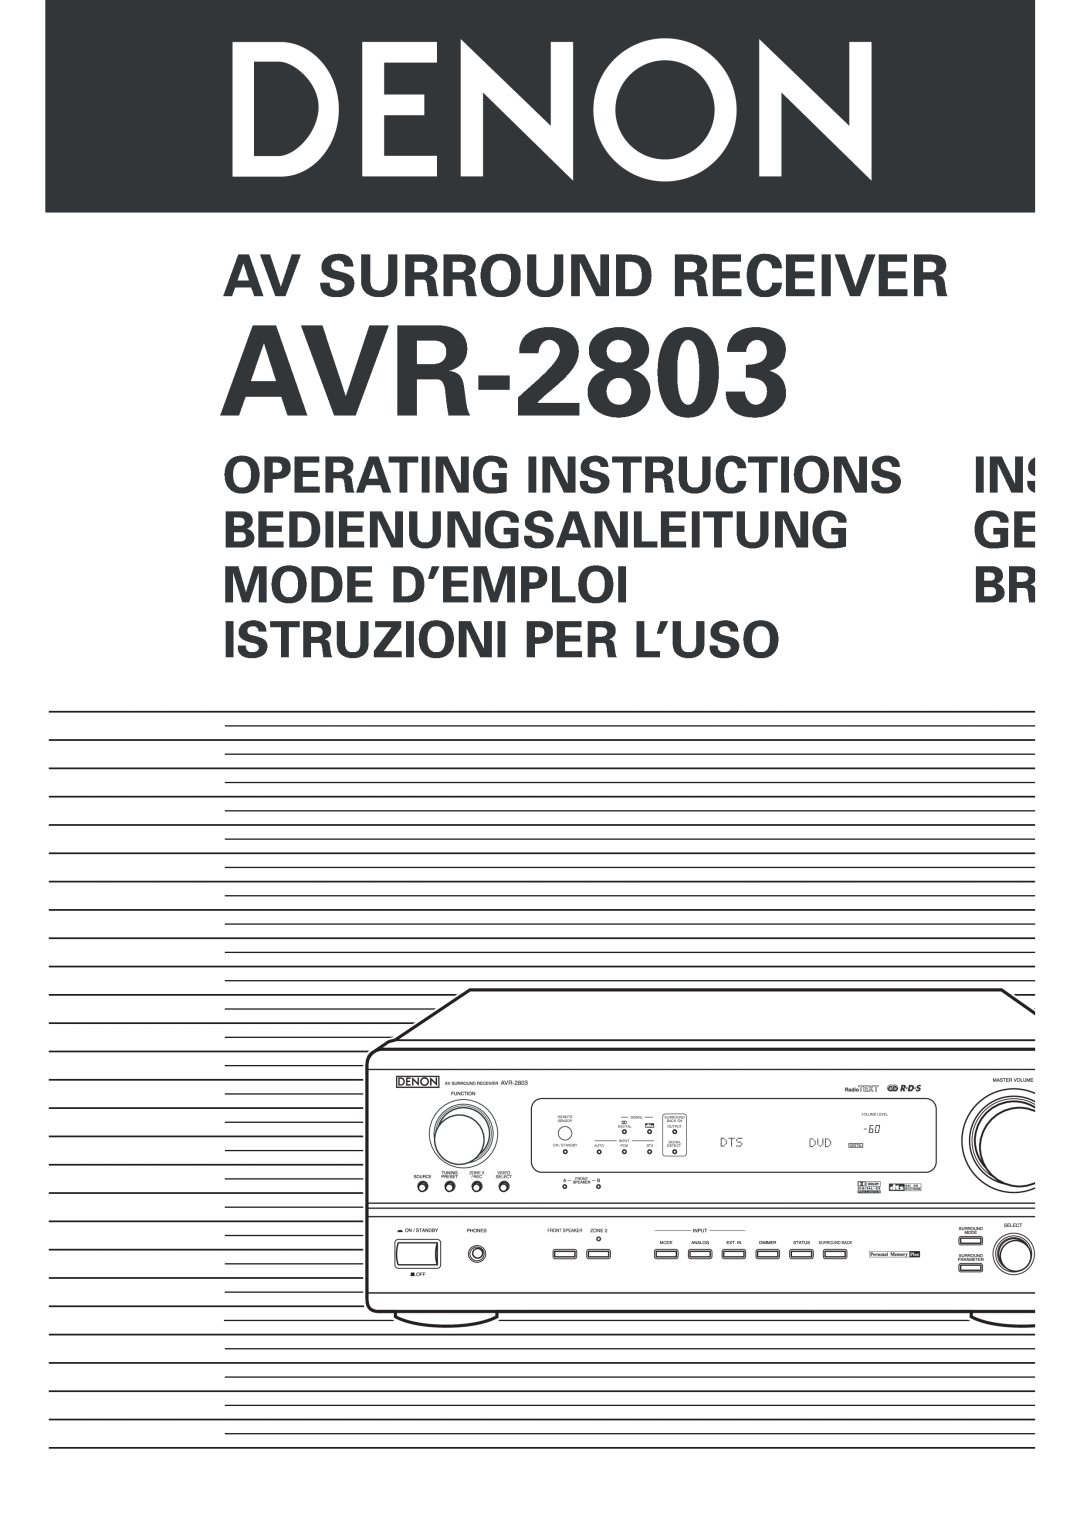 Denon AVR-2803 manual Av Surround Receiver, Operating Instructions, Bedienungsanleitung, Mode D’Emploi, Volume Level, Auto 